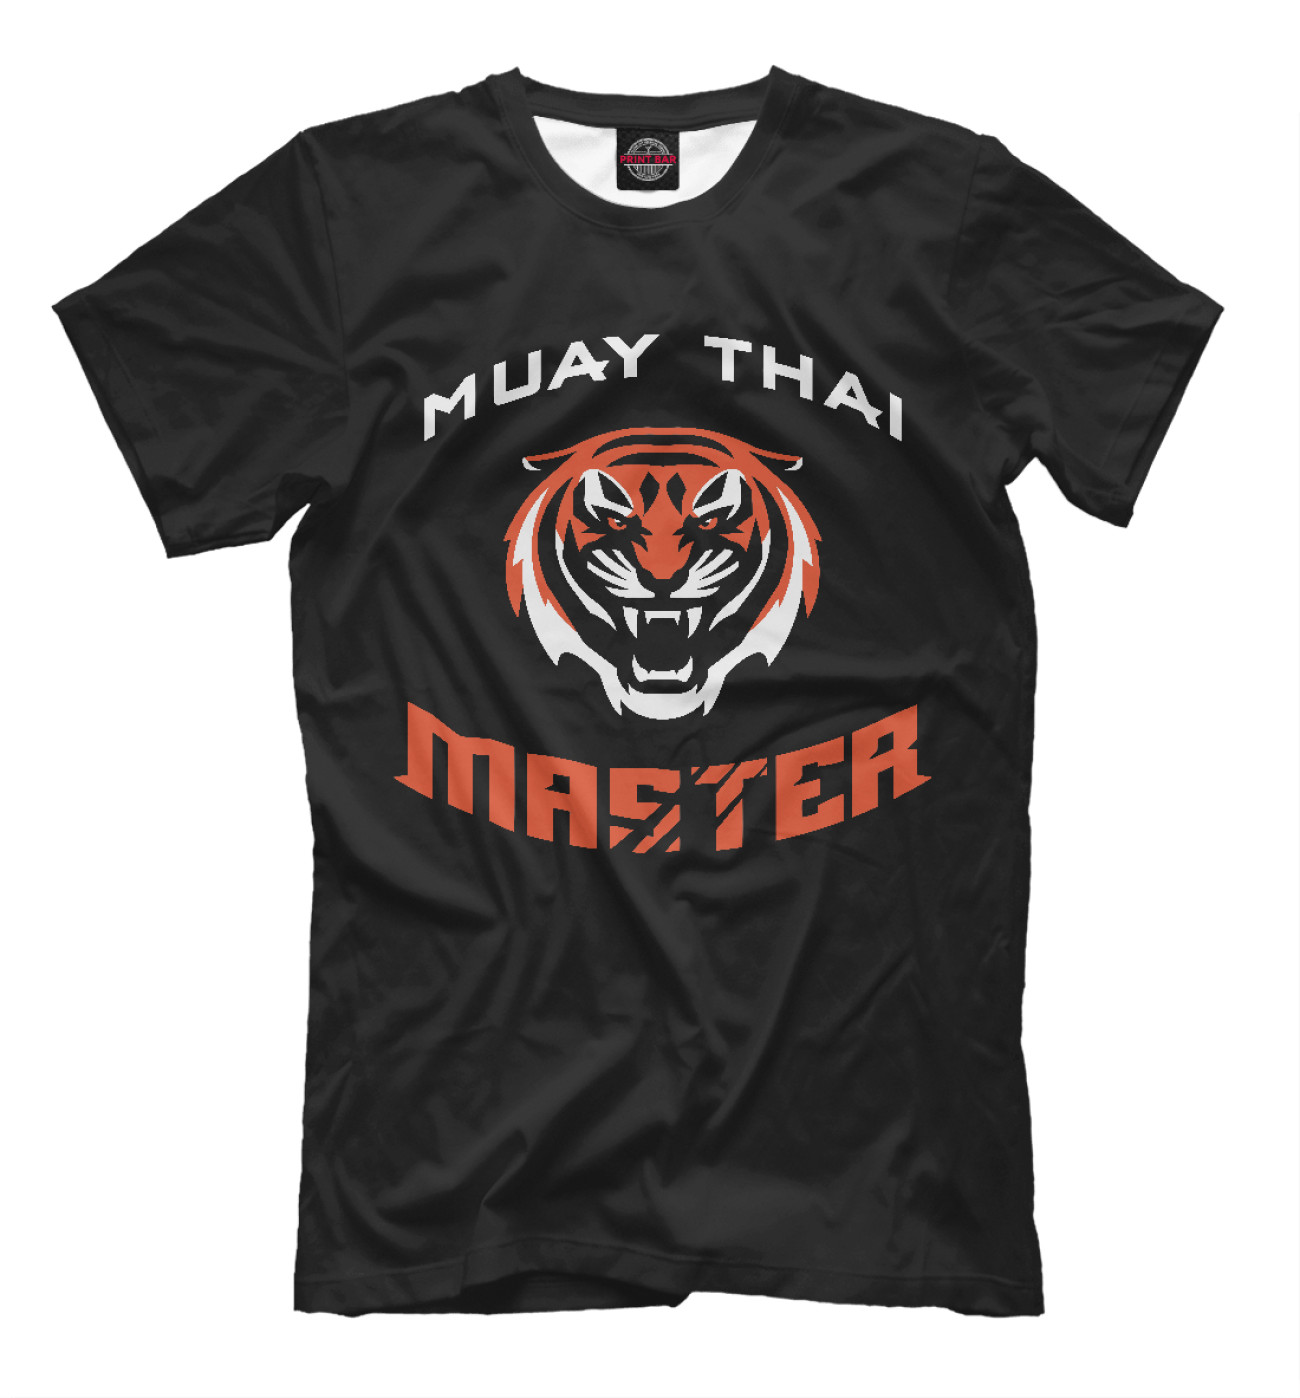 Мужская Футболка Muay Thai Master, артикул: MTH-598496-fut-2